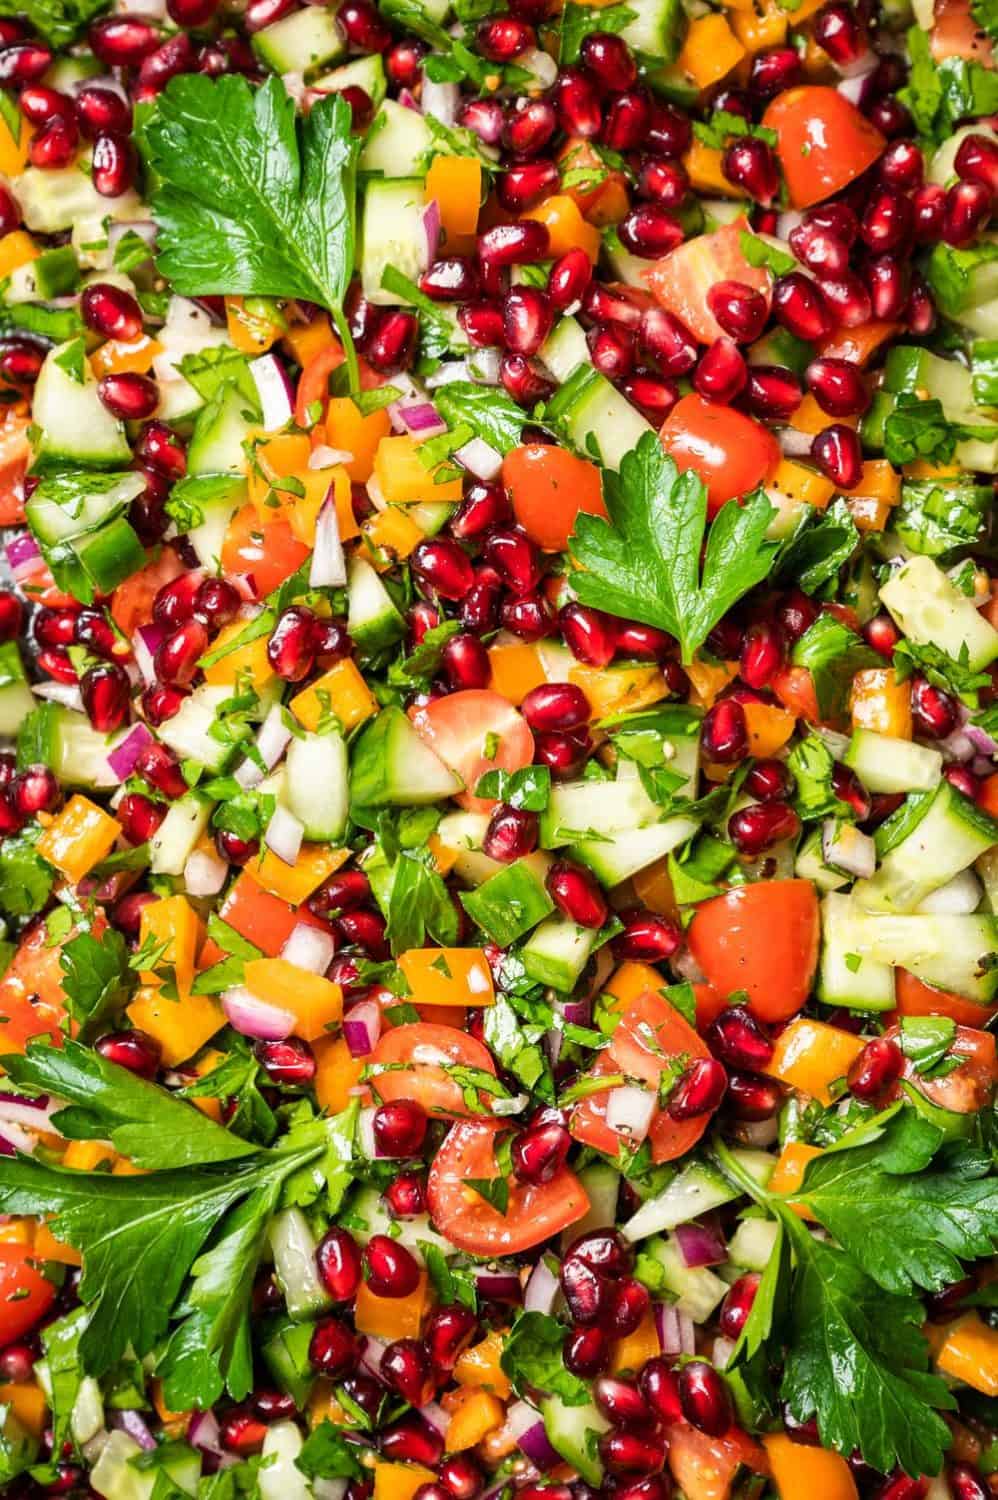 Israeli Salad with a California Twist